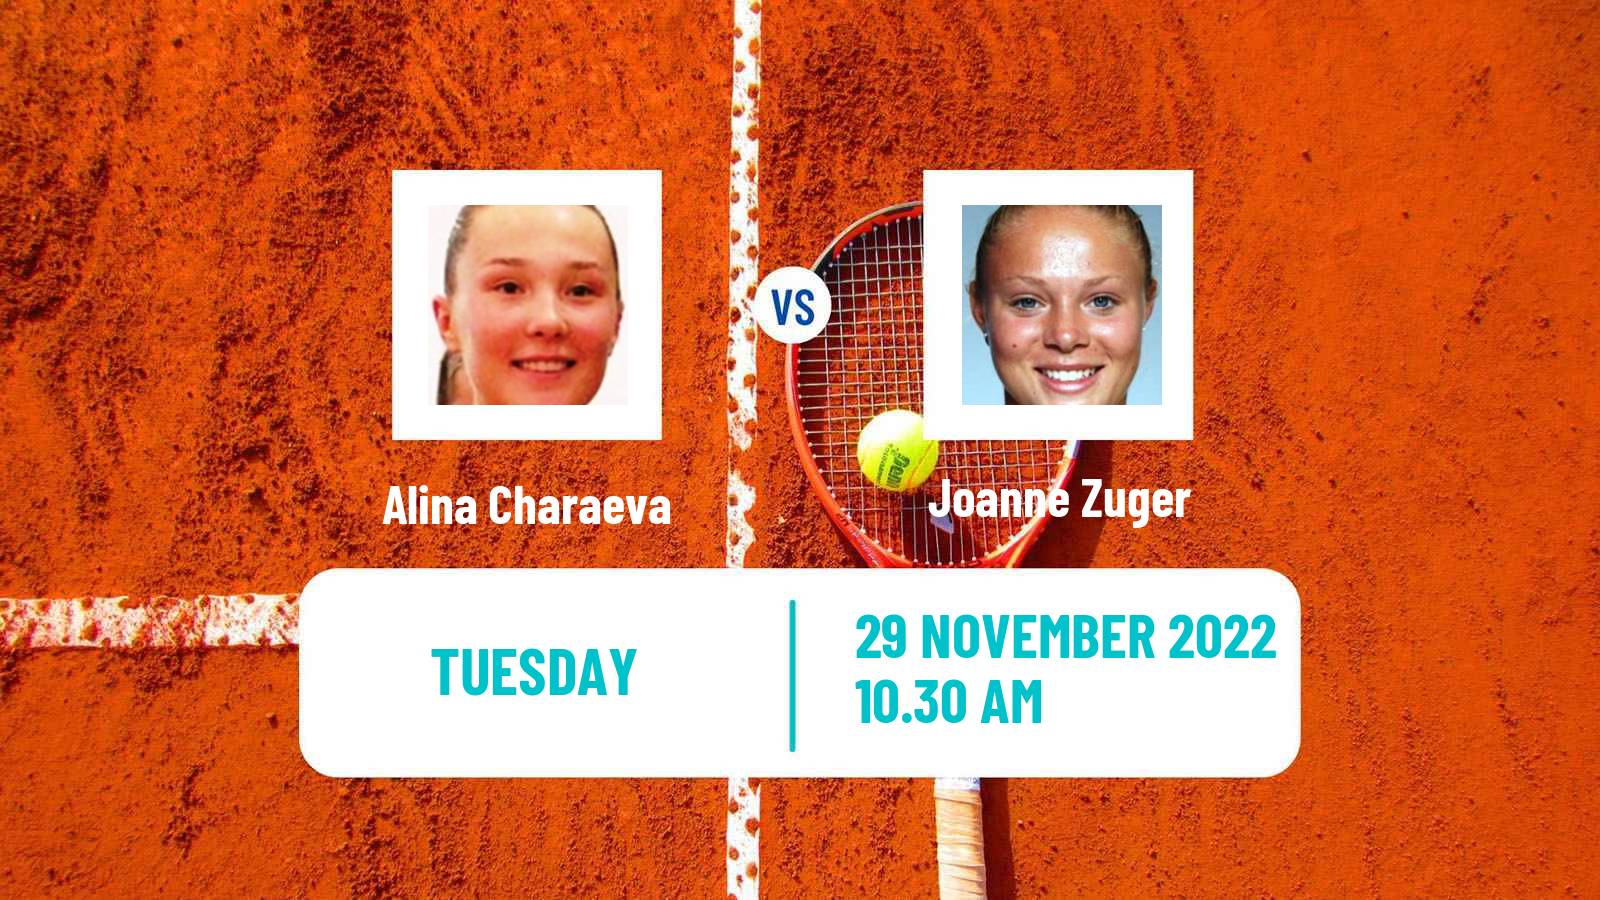 Tennis ATP Challenger Alina Charaeva - Joanne Zuger